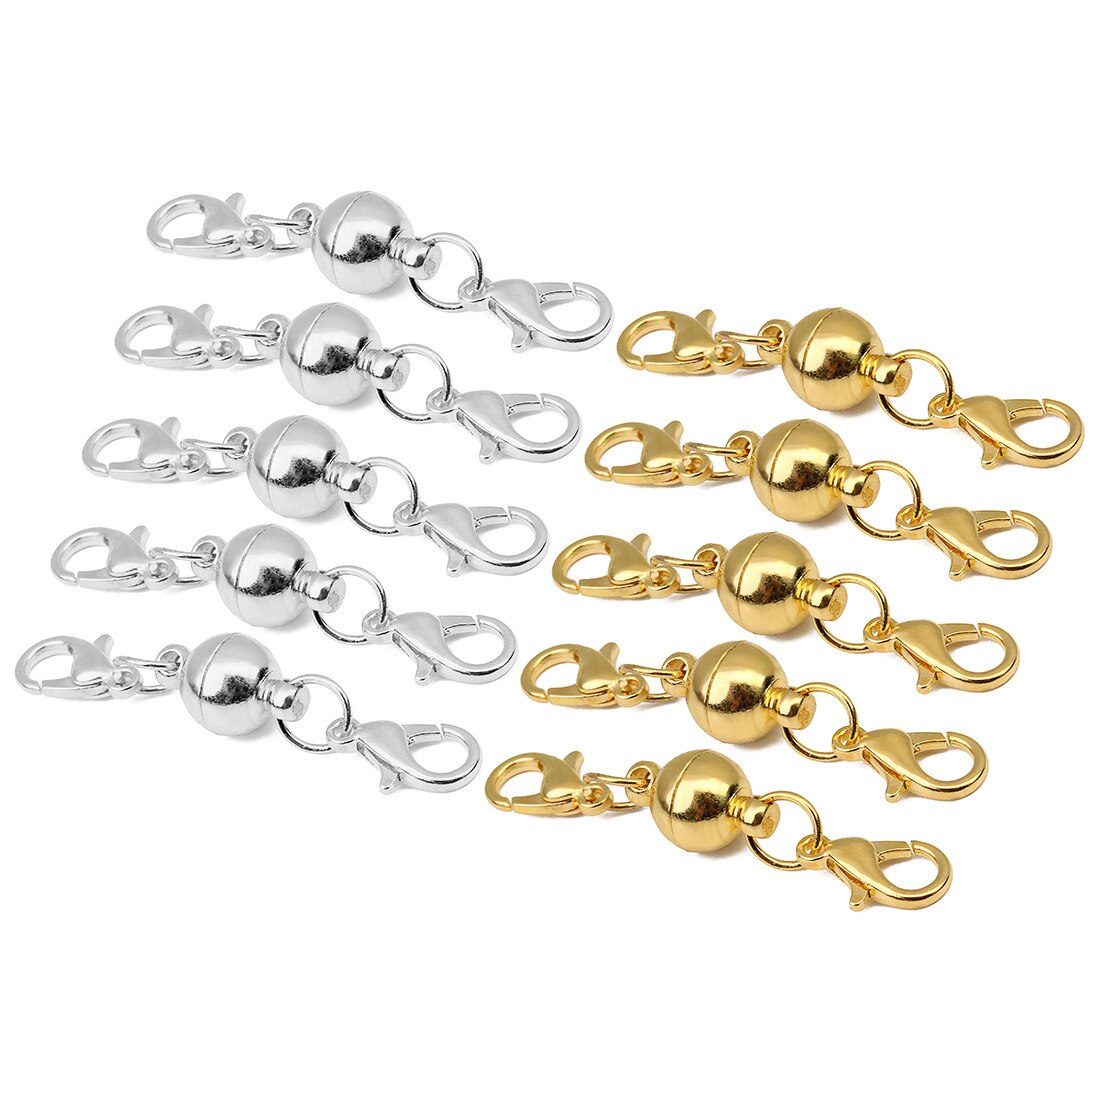 5pcs/lot DIY Jewelry Accessories Copper Color Retaining Ball Magnet Buckle Bracelet Necklace Connection Buckle Mask Connector